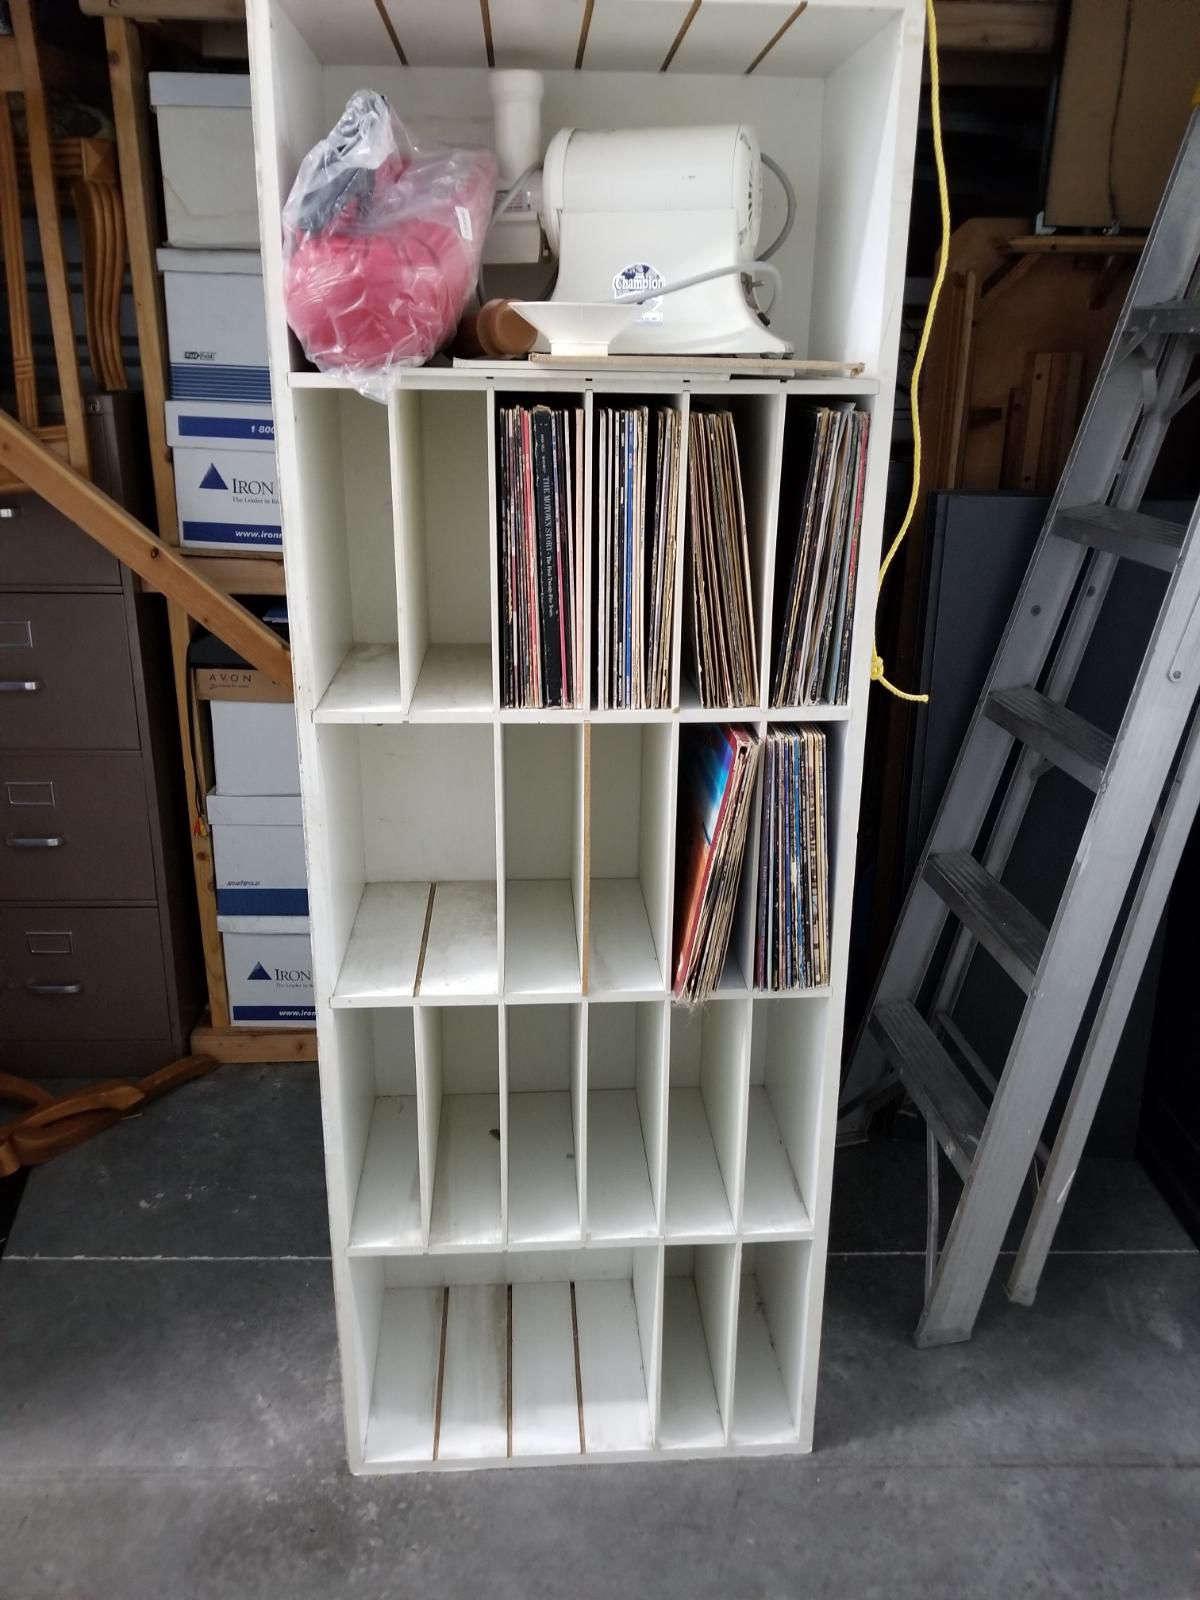 Solid heavy shelf organizer, great for albums